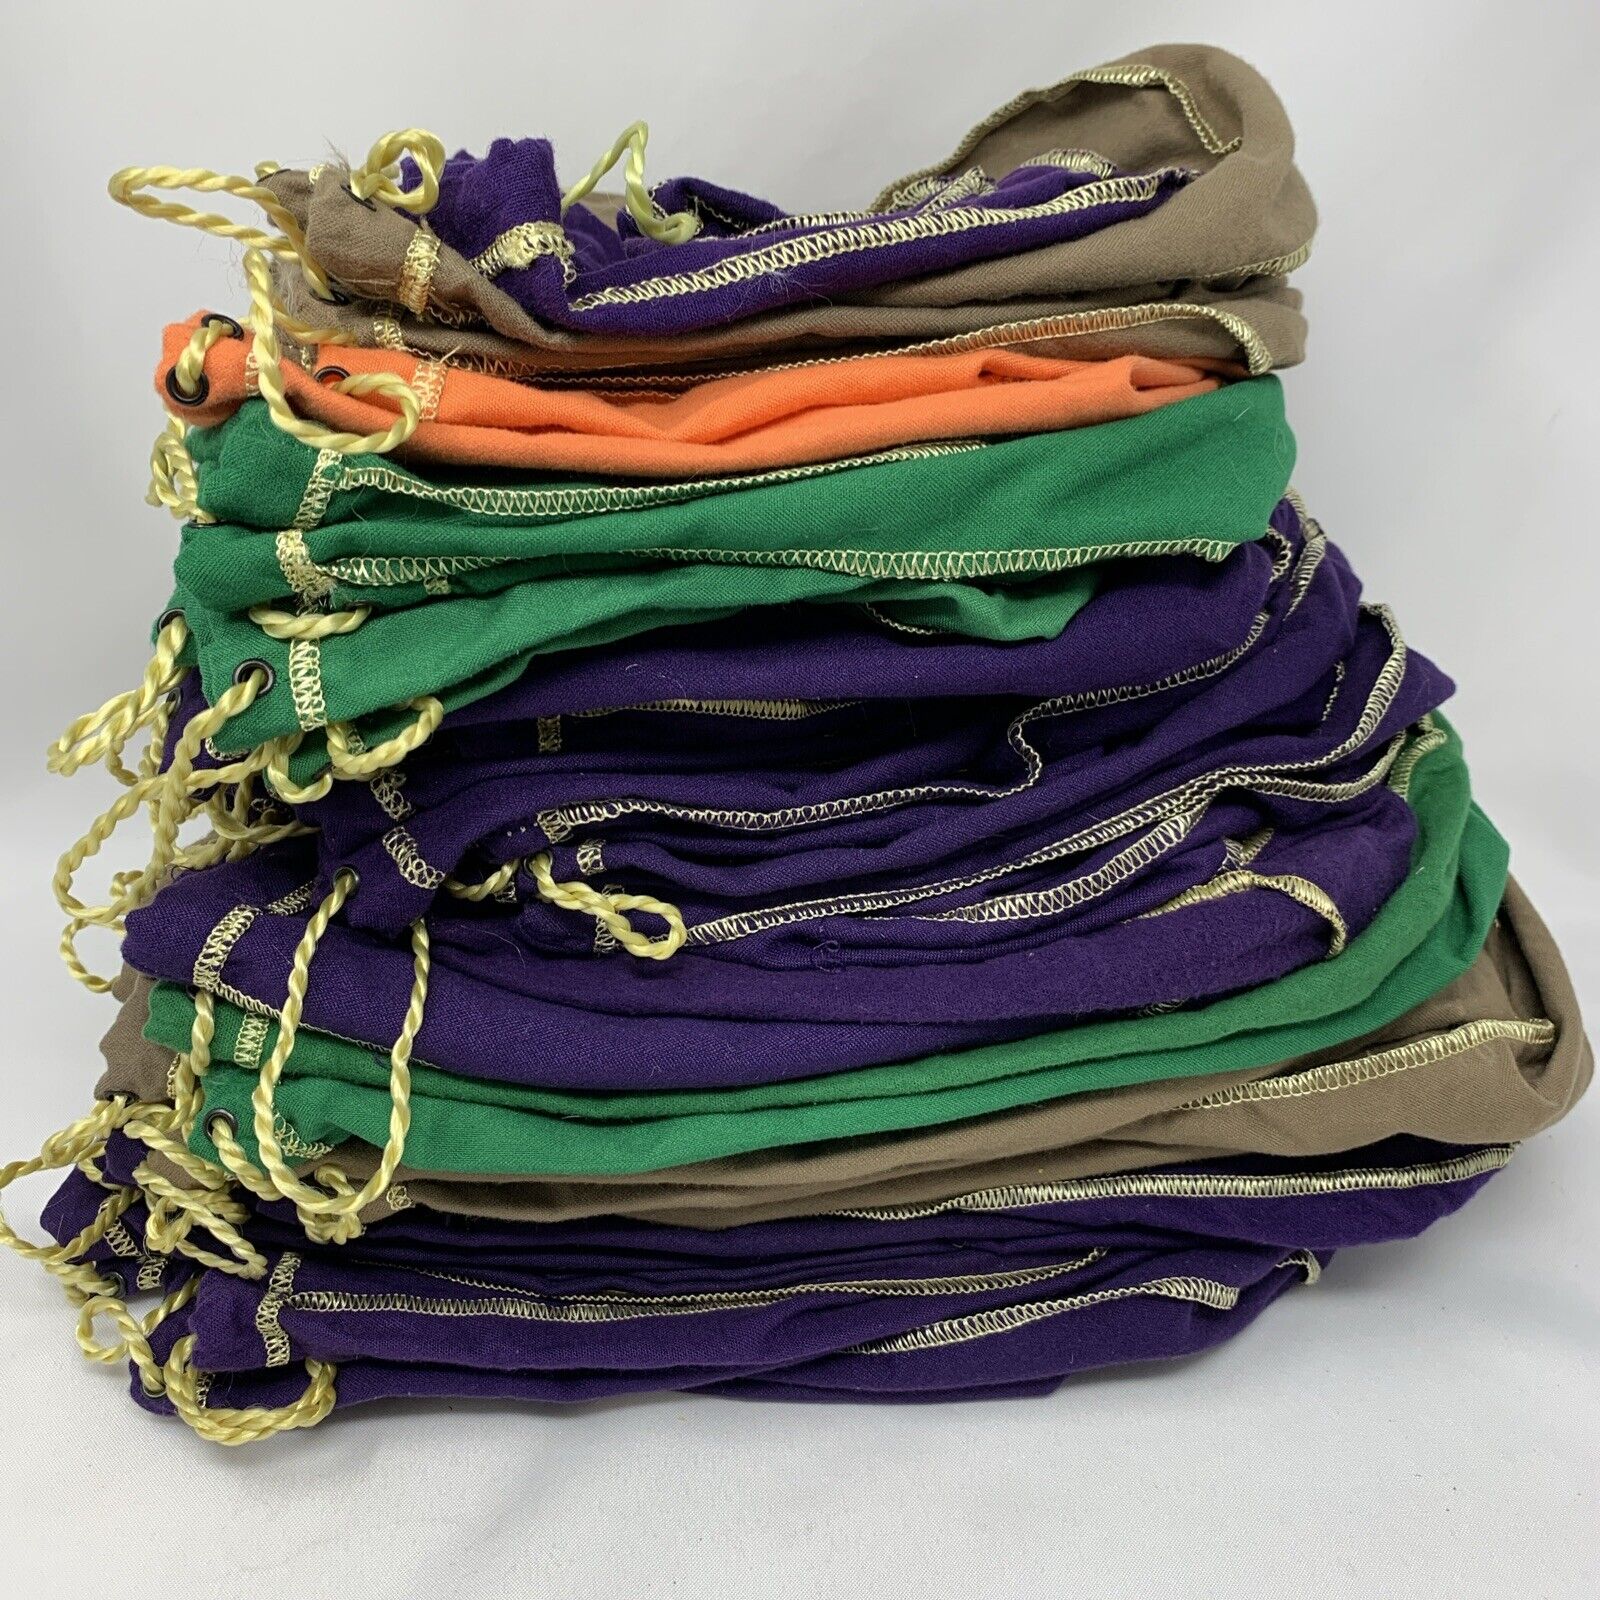 Lot of 65 CROWN ROYAL Drawstring Bags - All sizes and colors + 3 BONUS 2405028